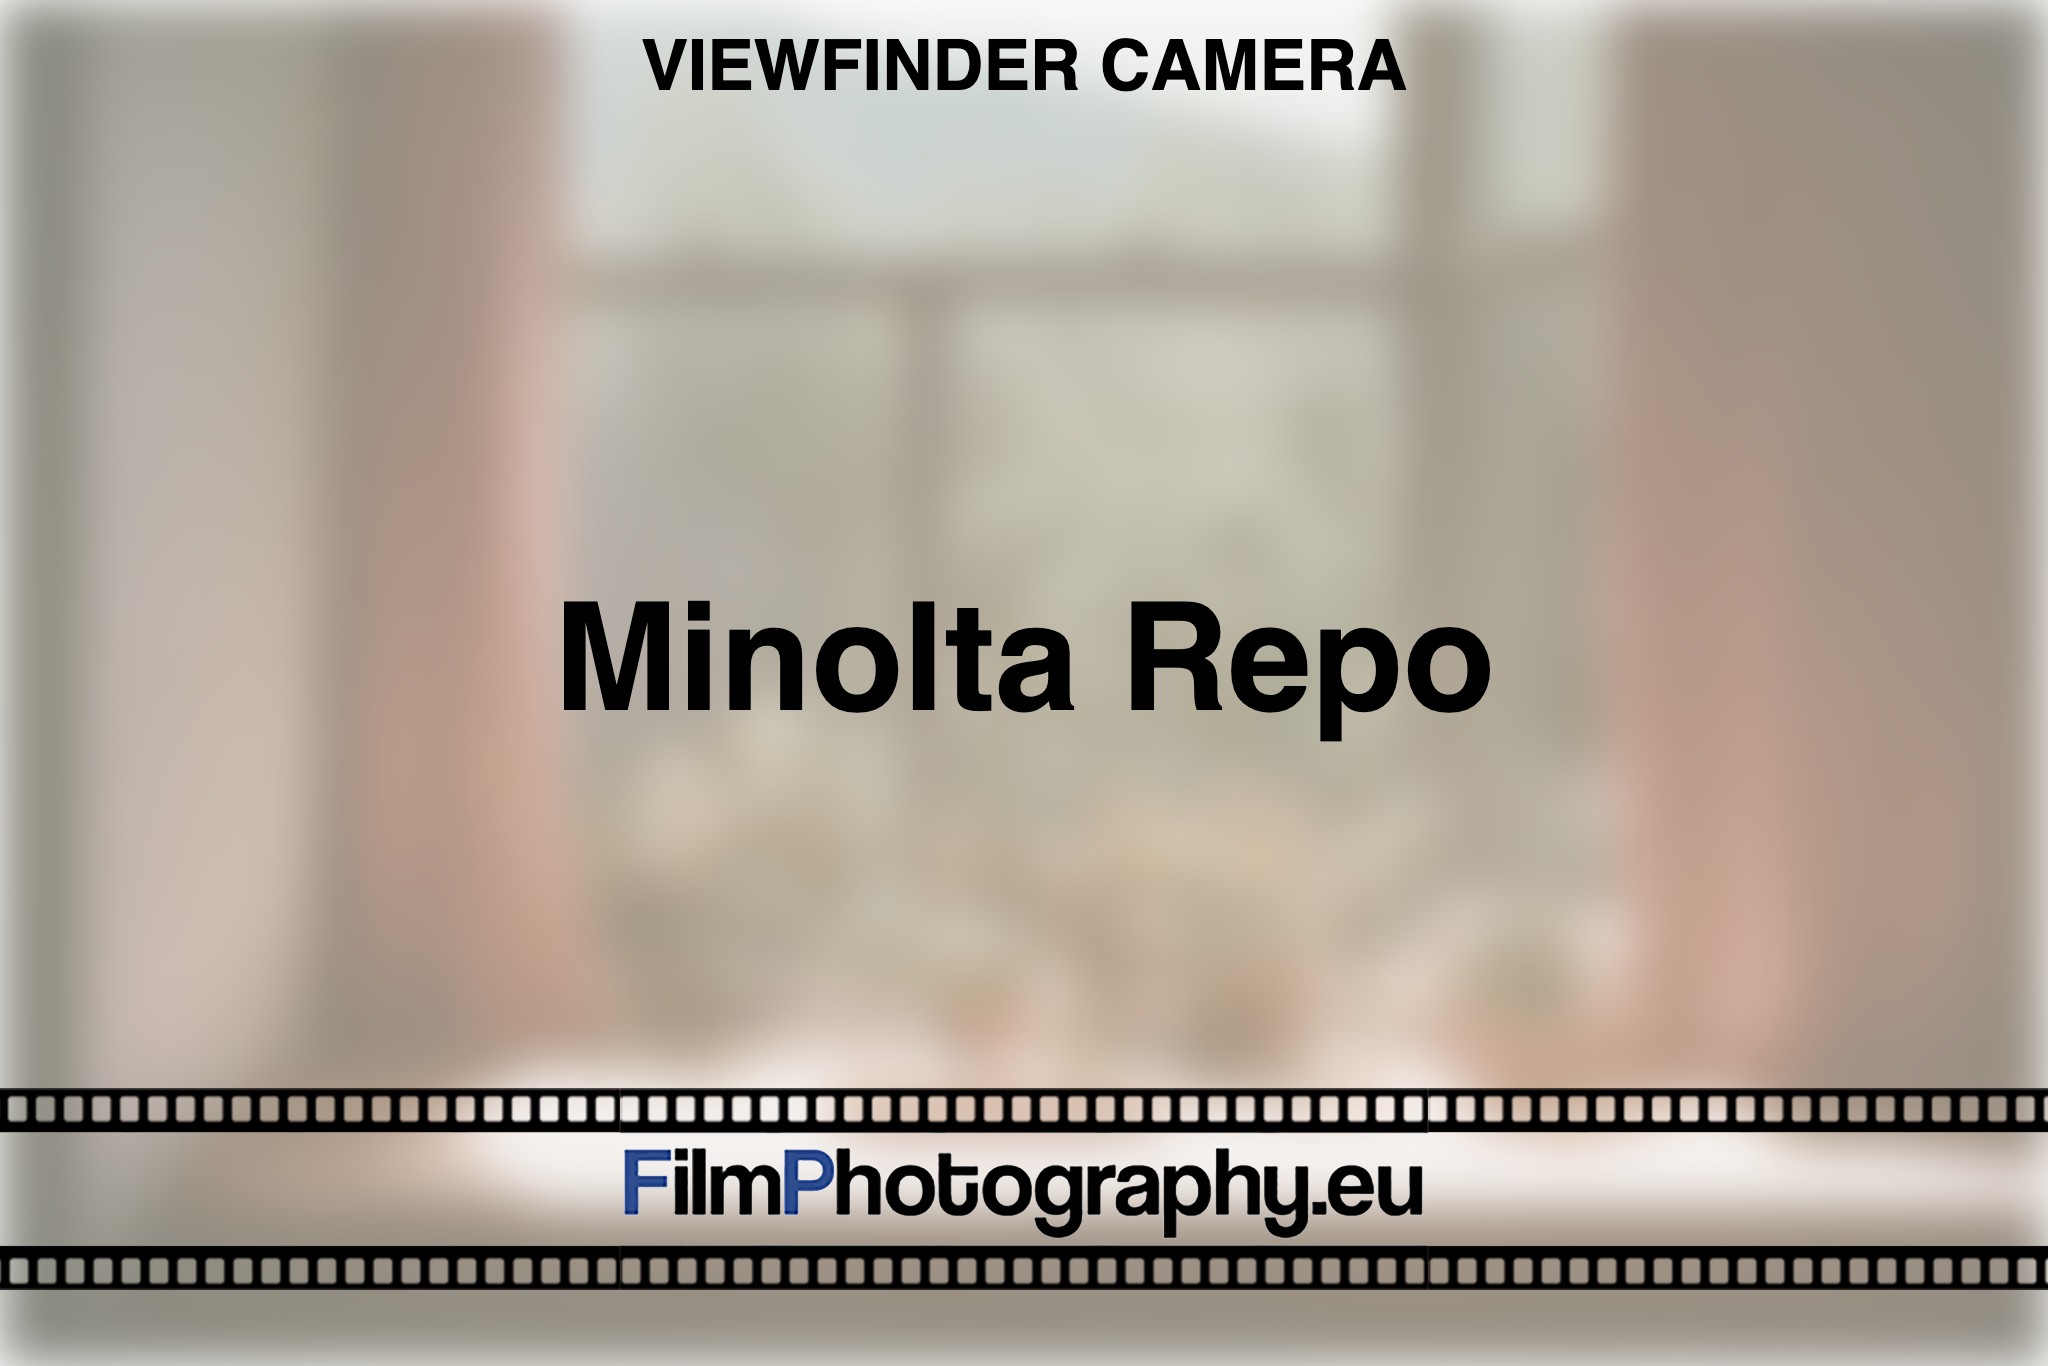 minolta-repo-viewfinder-camera-bnv